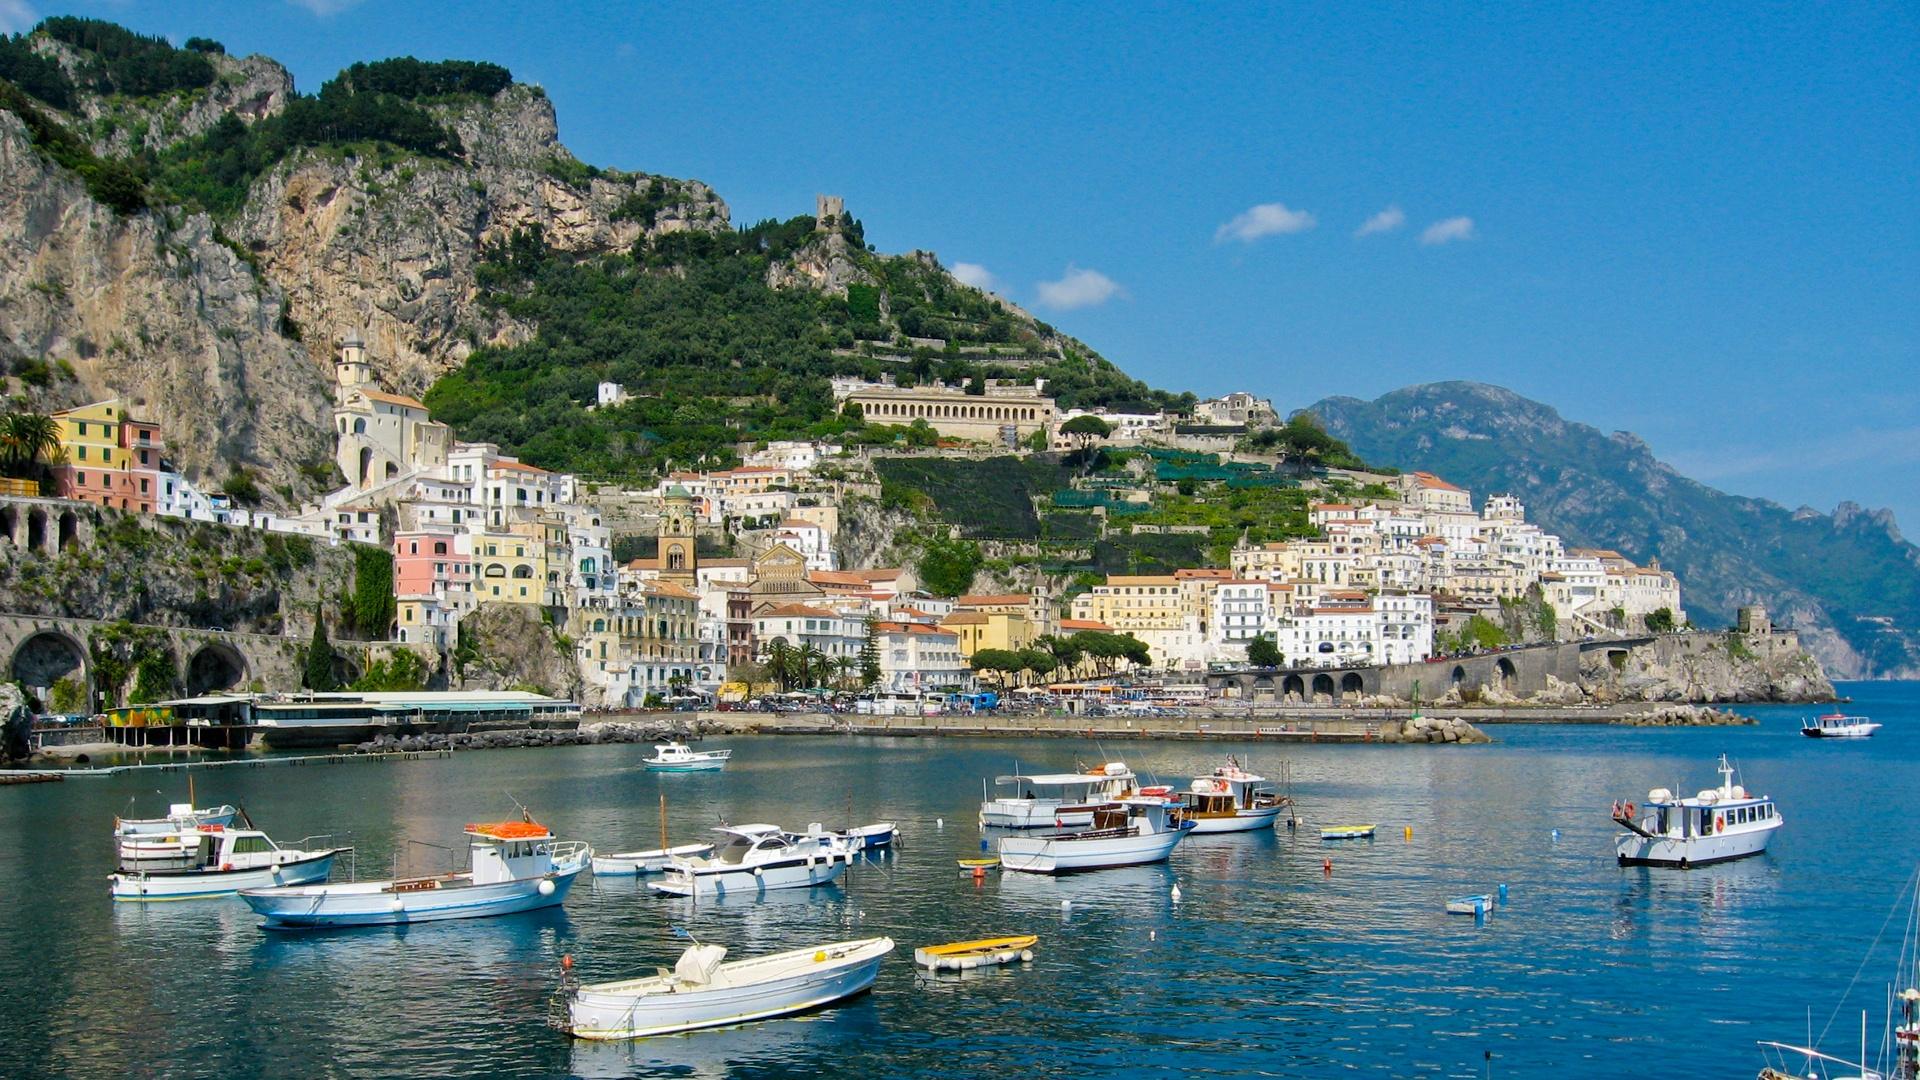 Italy's Amalfi Coast